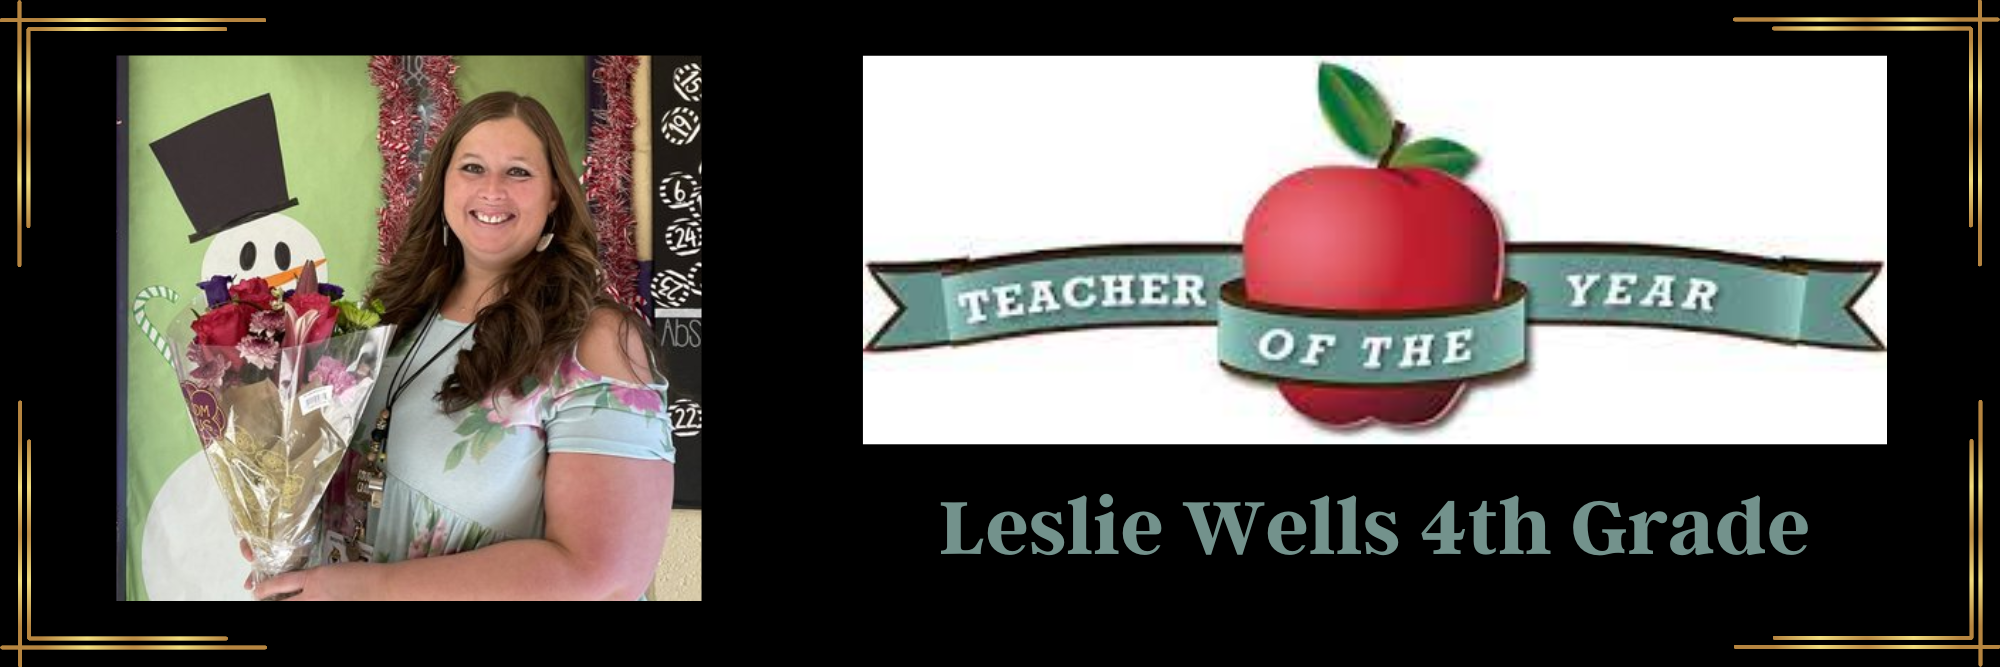 Teacher of the year - Leslie Wells 4th Grade